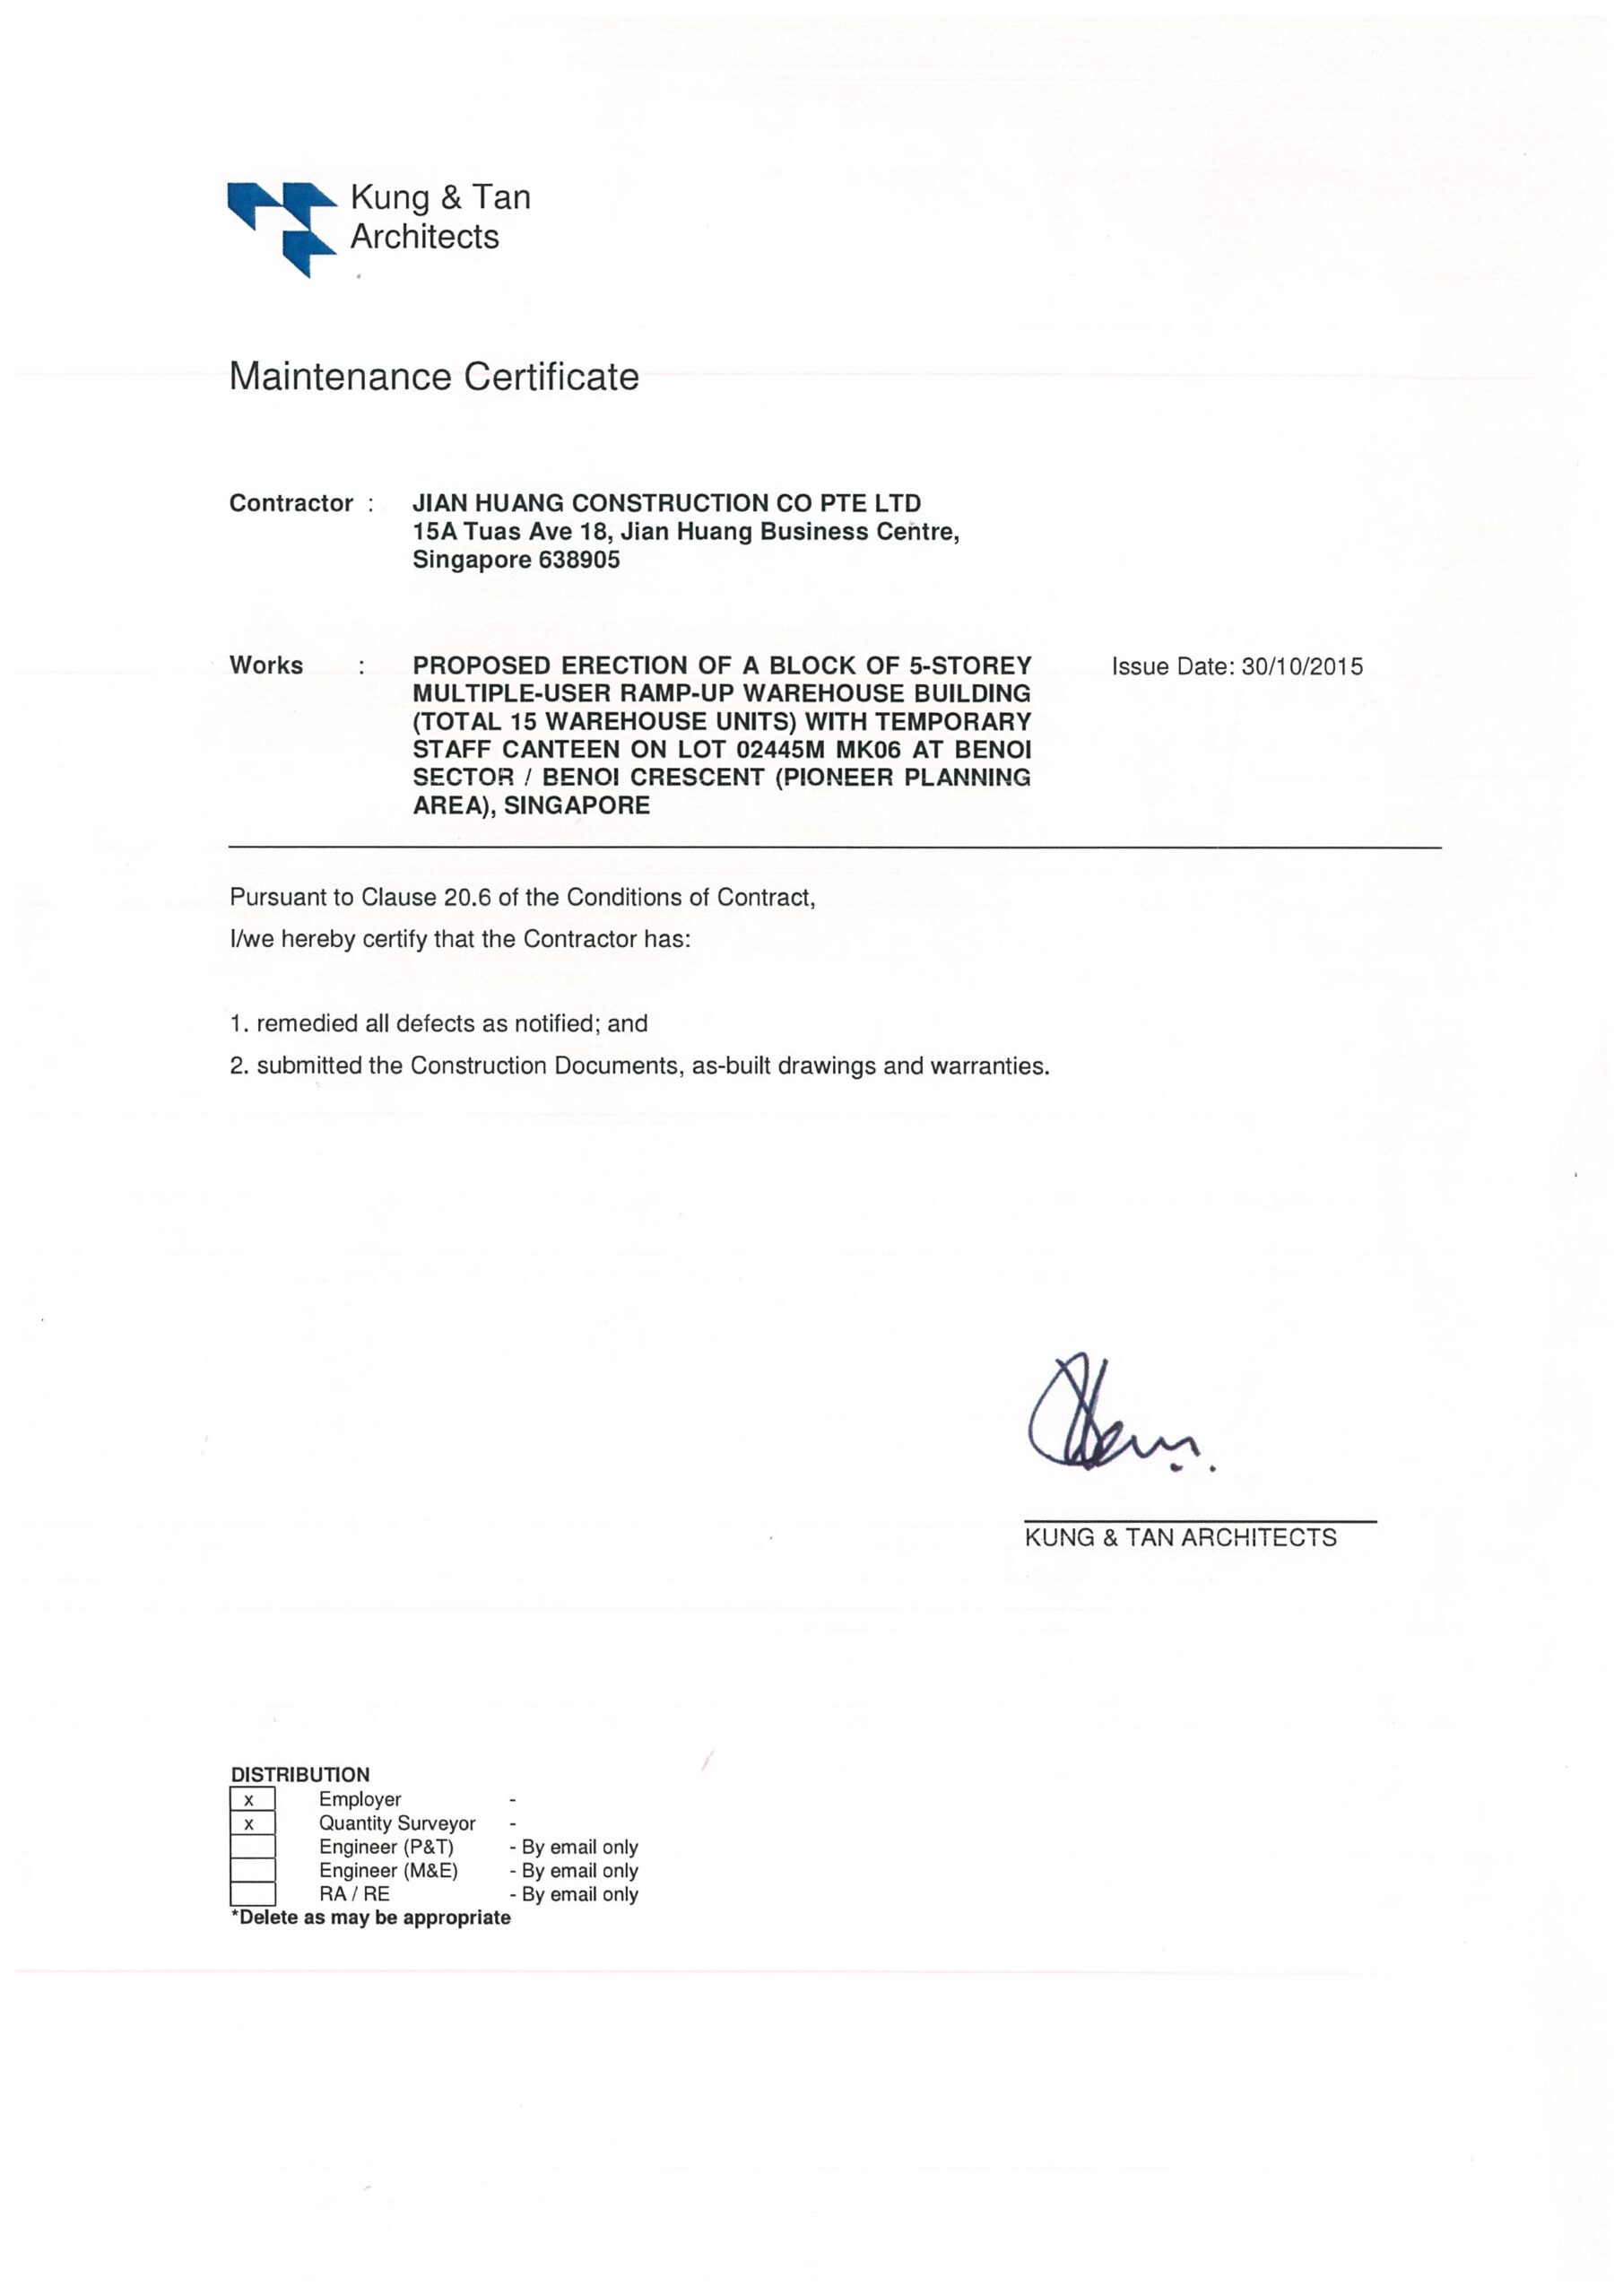 Maintenance Certificate Obtained – Benoi Crescent Project